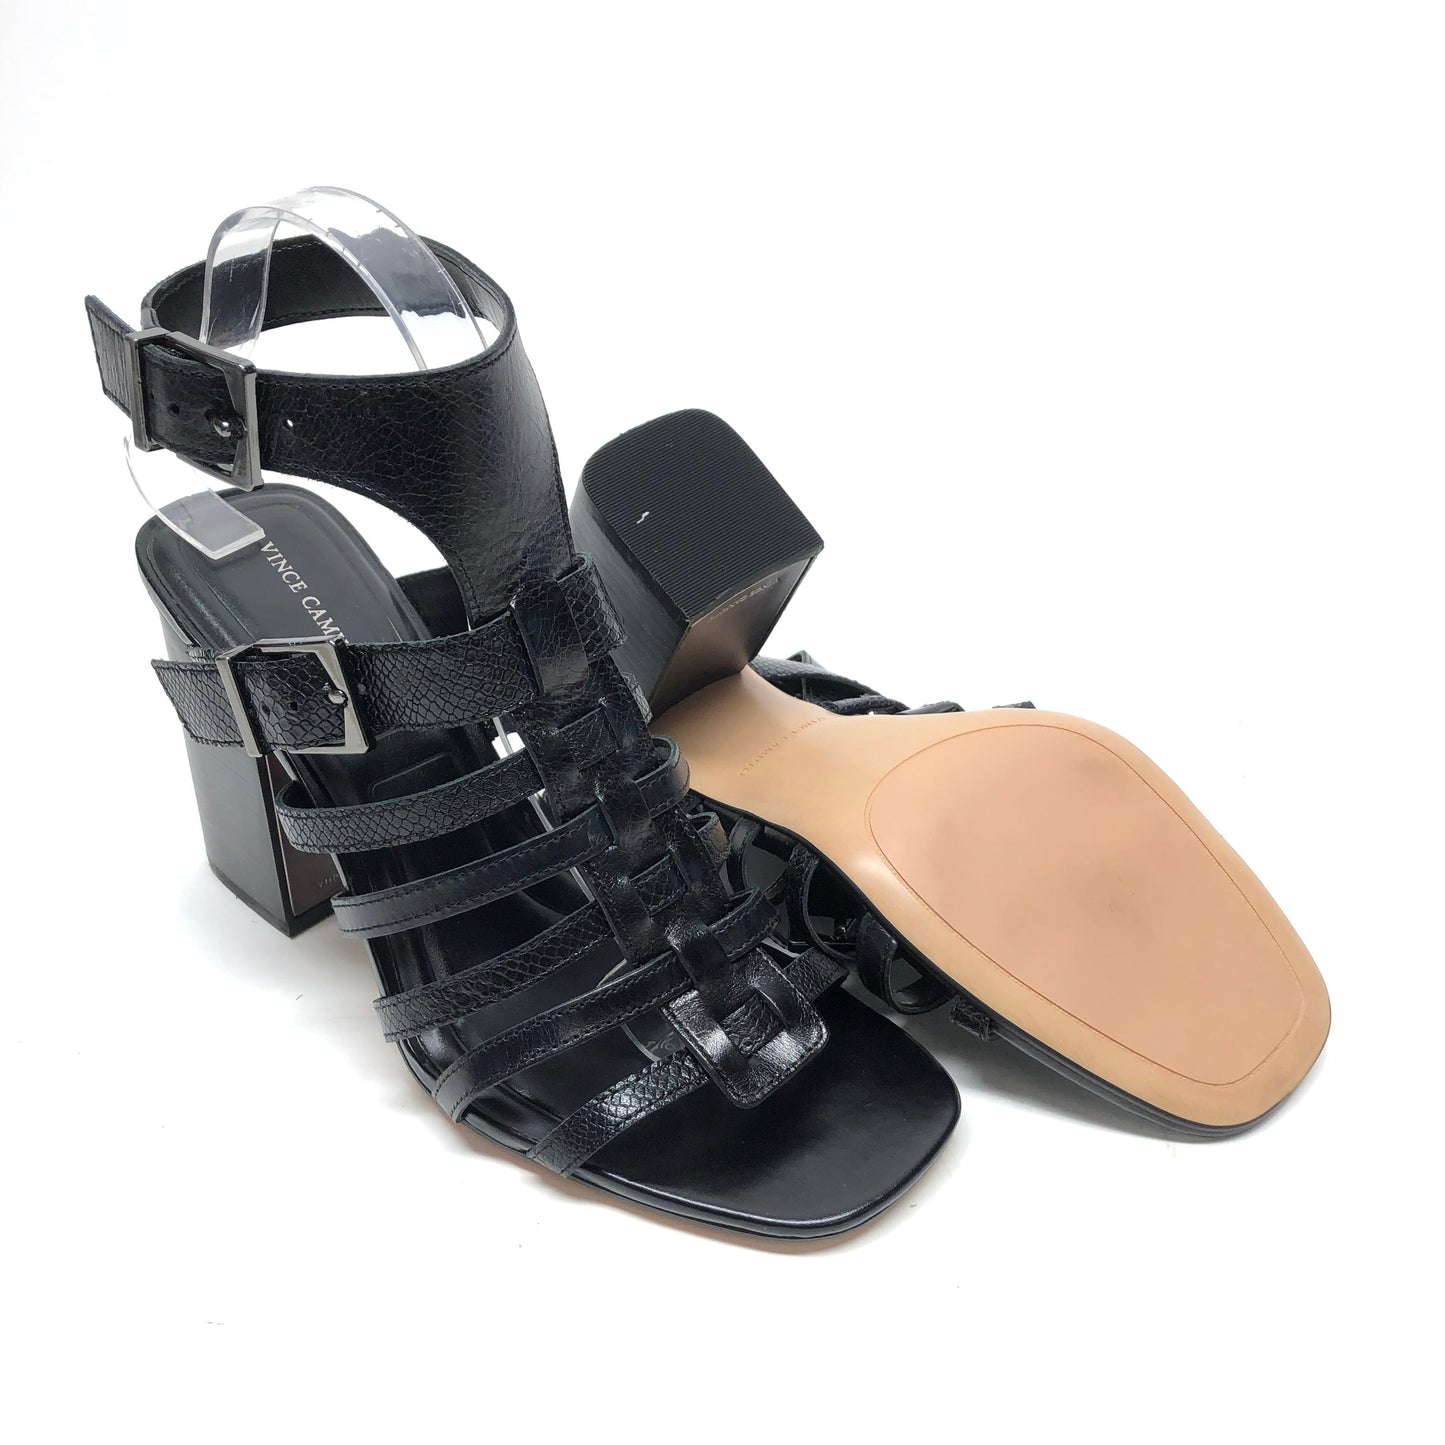 Black Sandals Heels Block Vince Camuto, Size 9